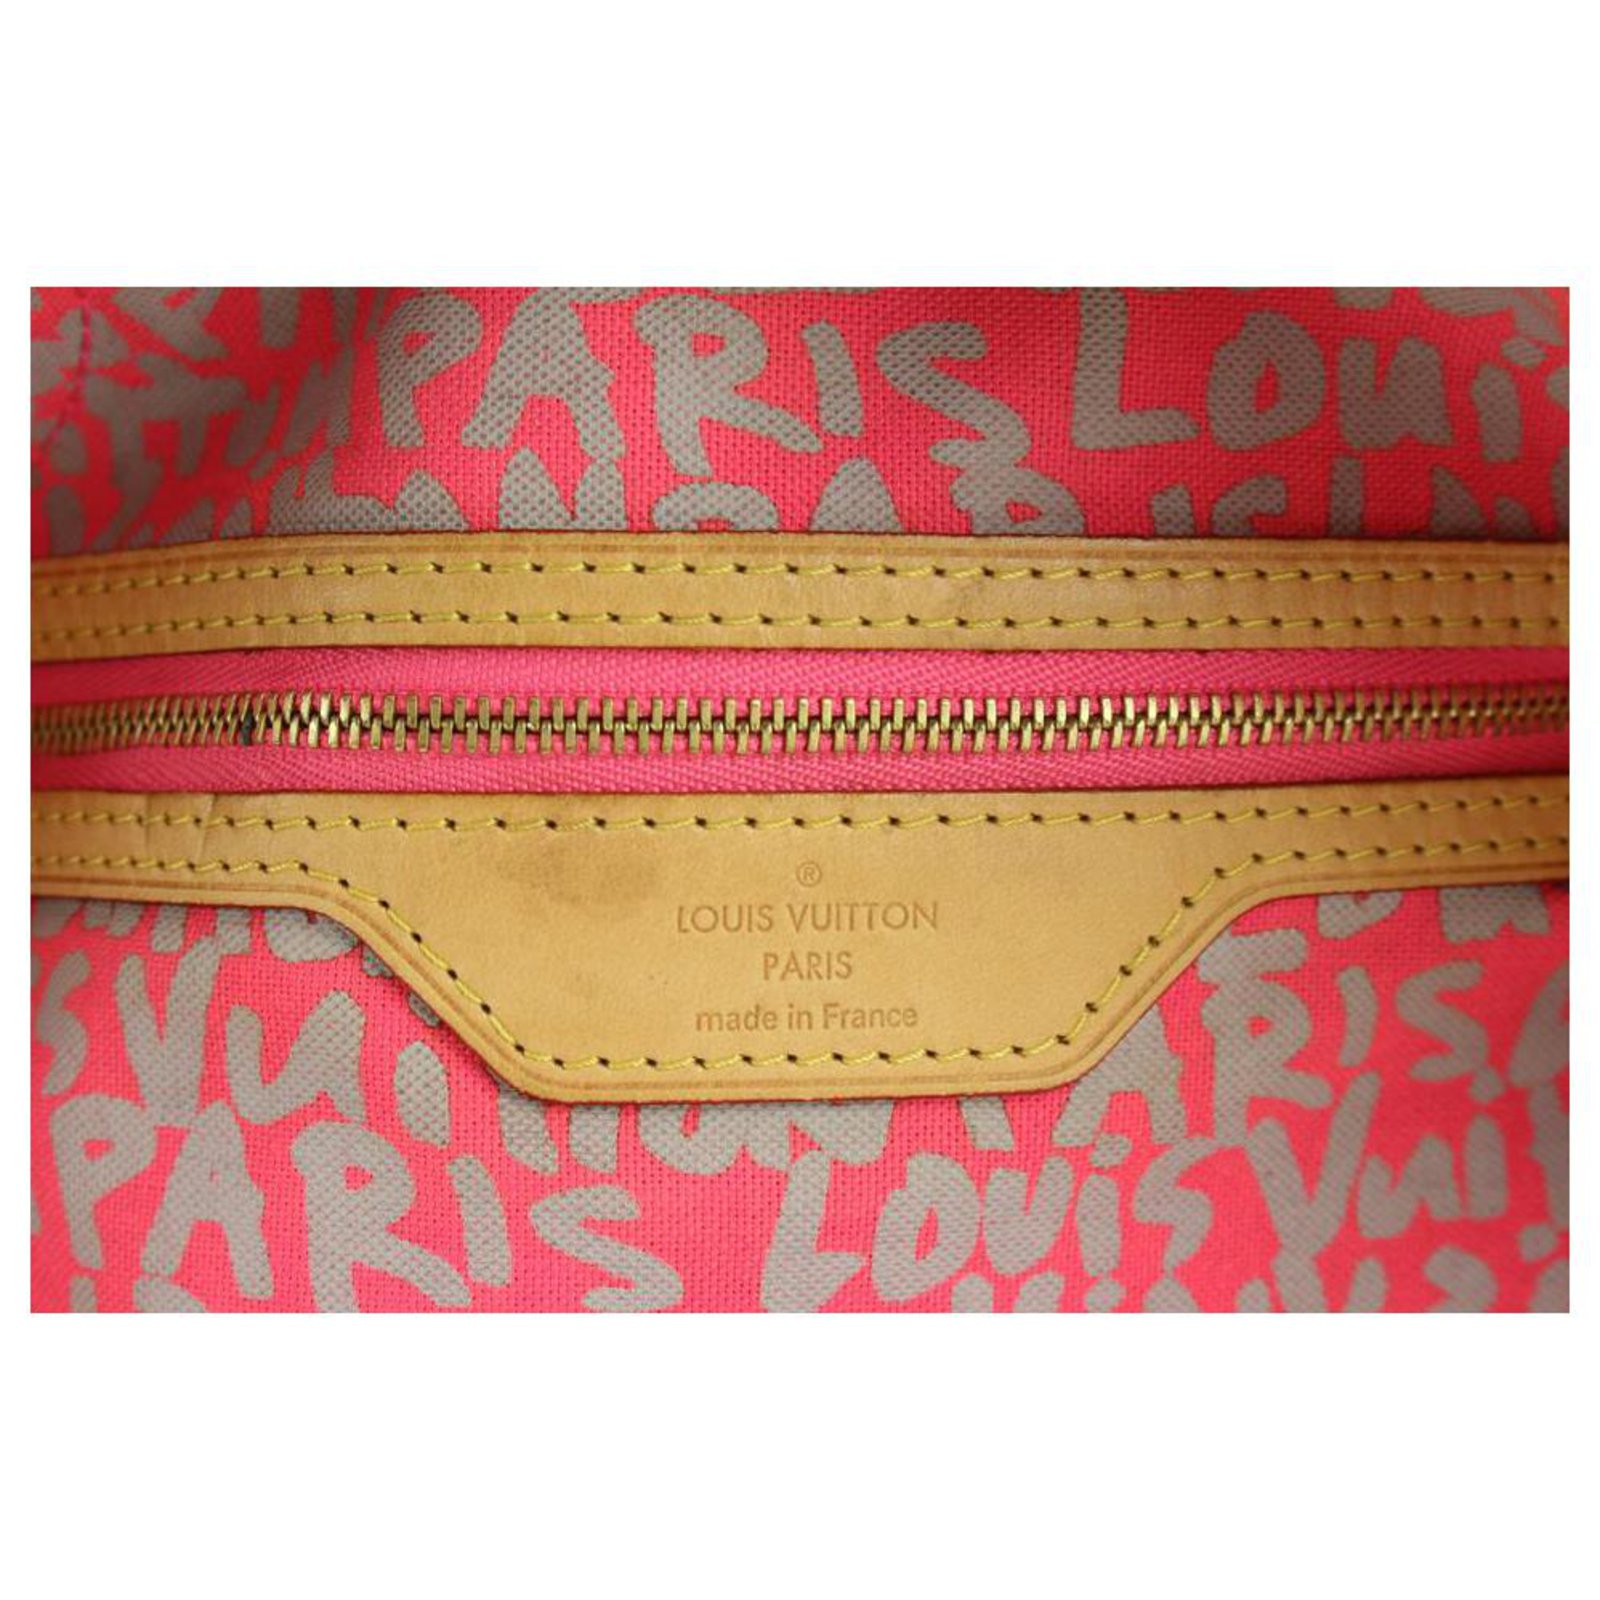 Louis Vuitton Stephen Sprouse Pink Graffiti Monogram Neverfull GM Tote Bag